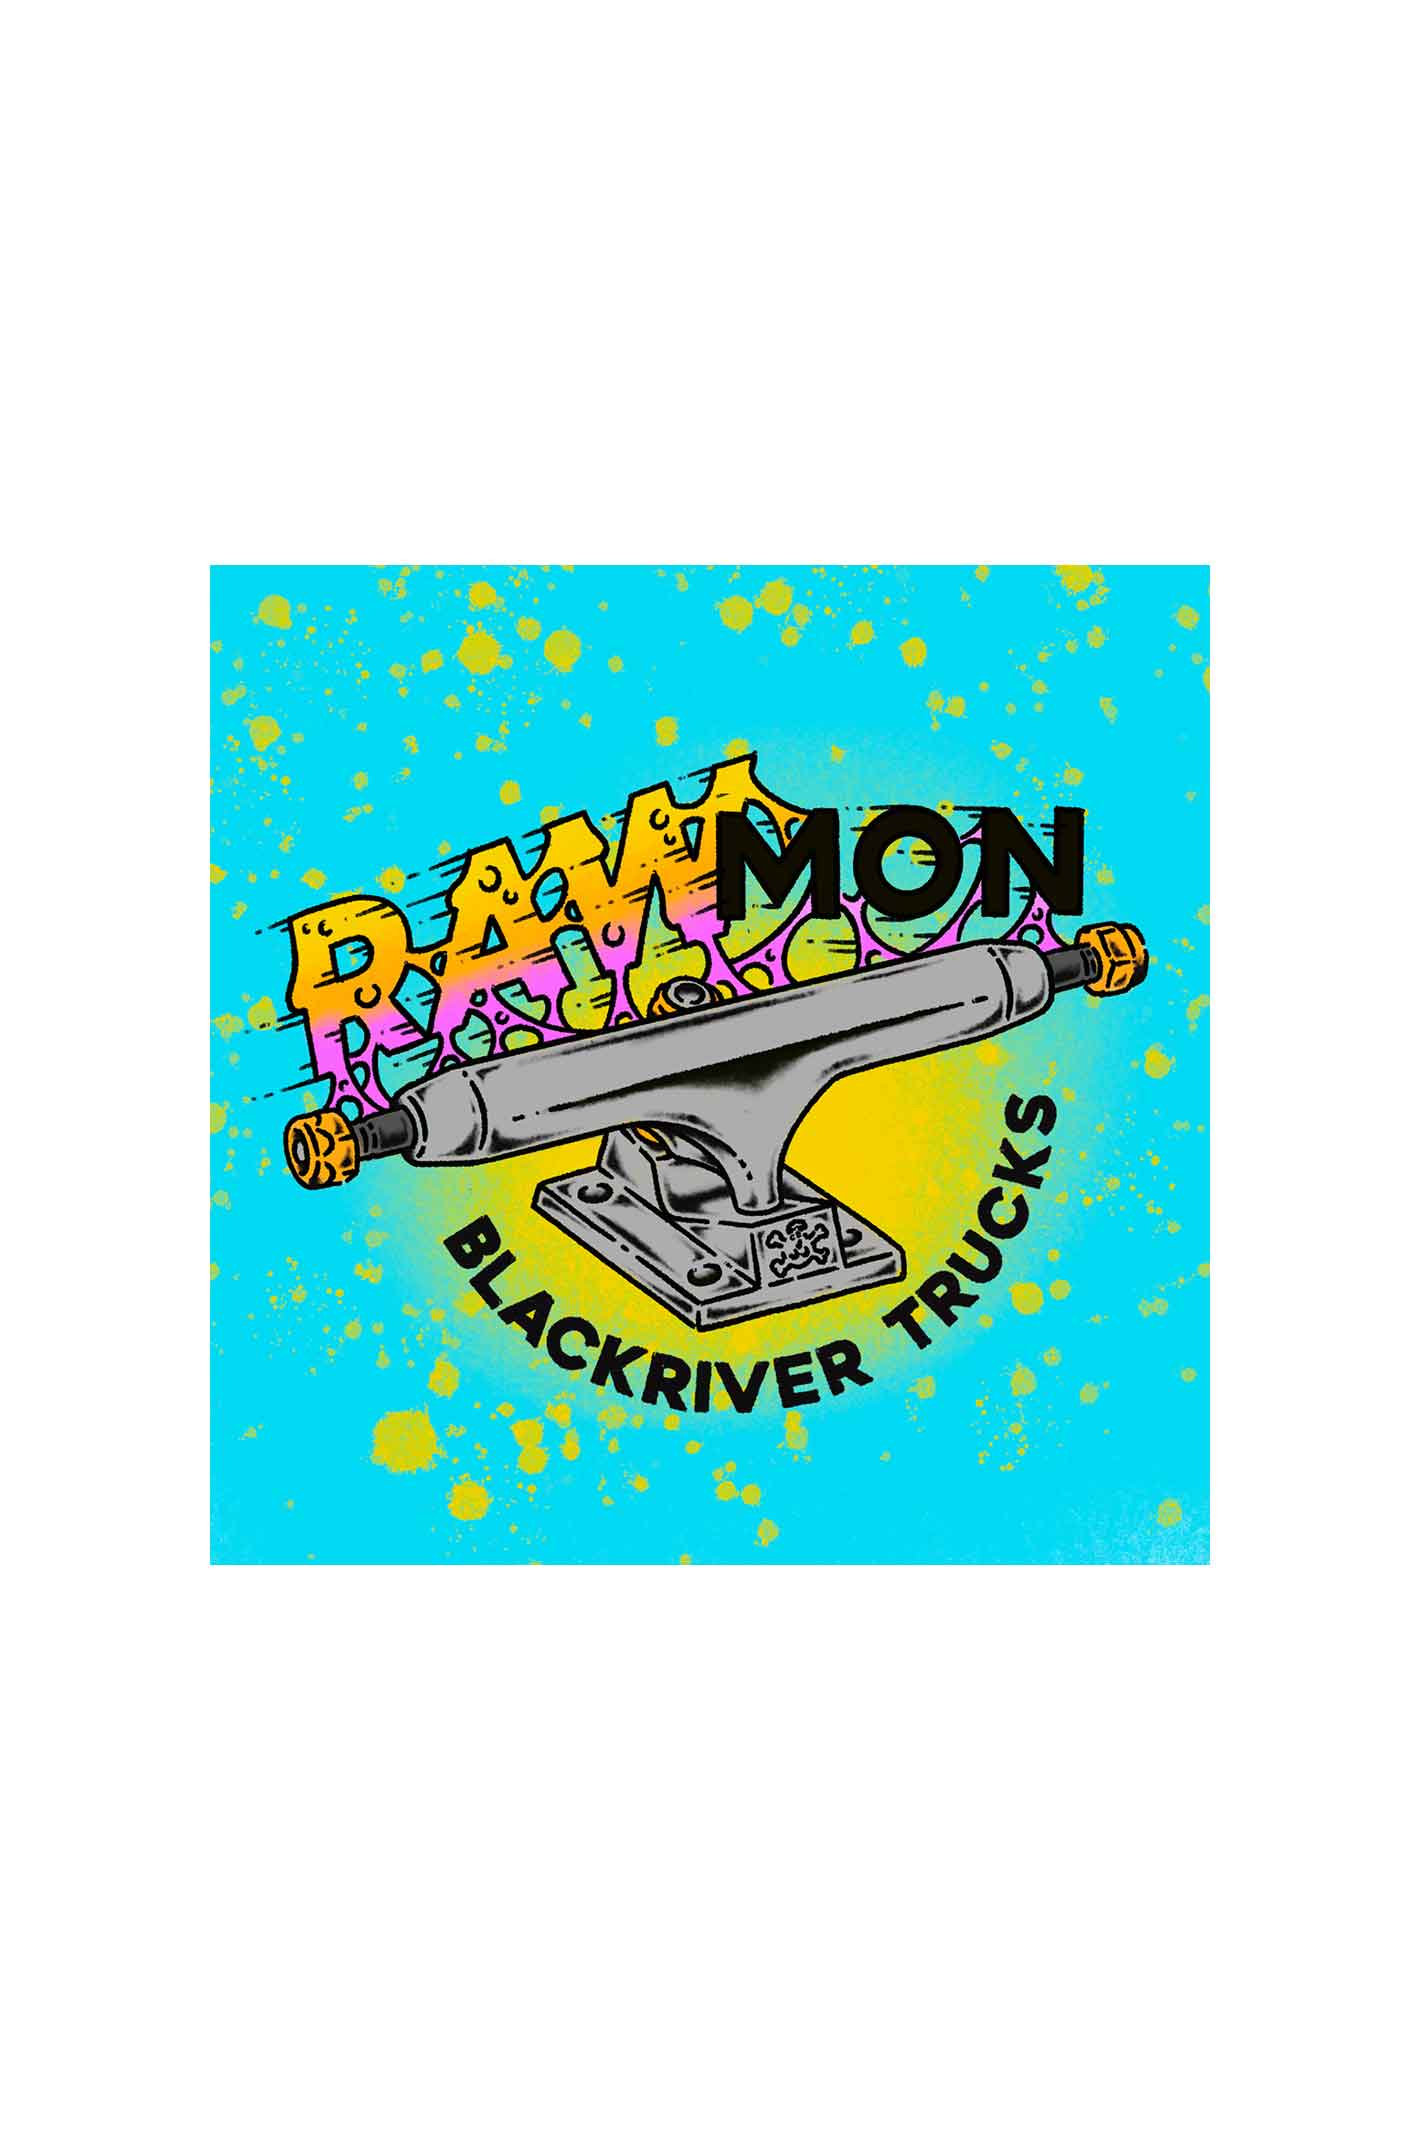 34mm Blackriver Trucks 3.0 RAWmon